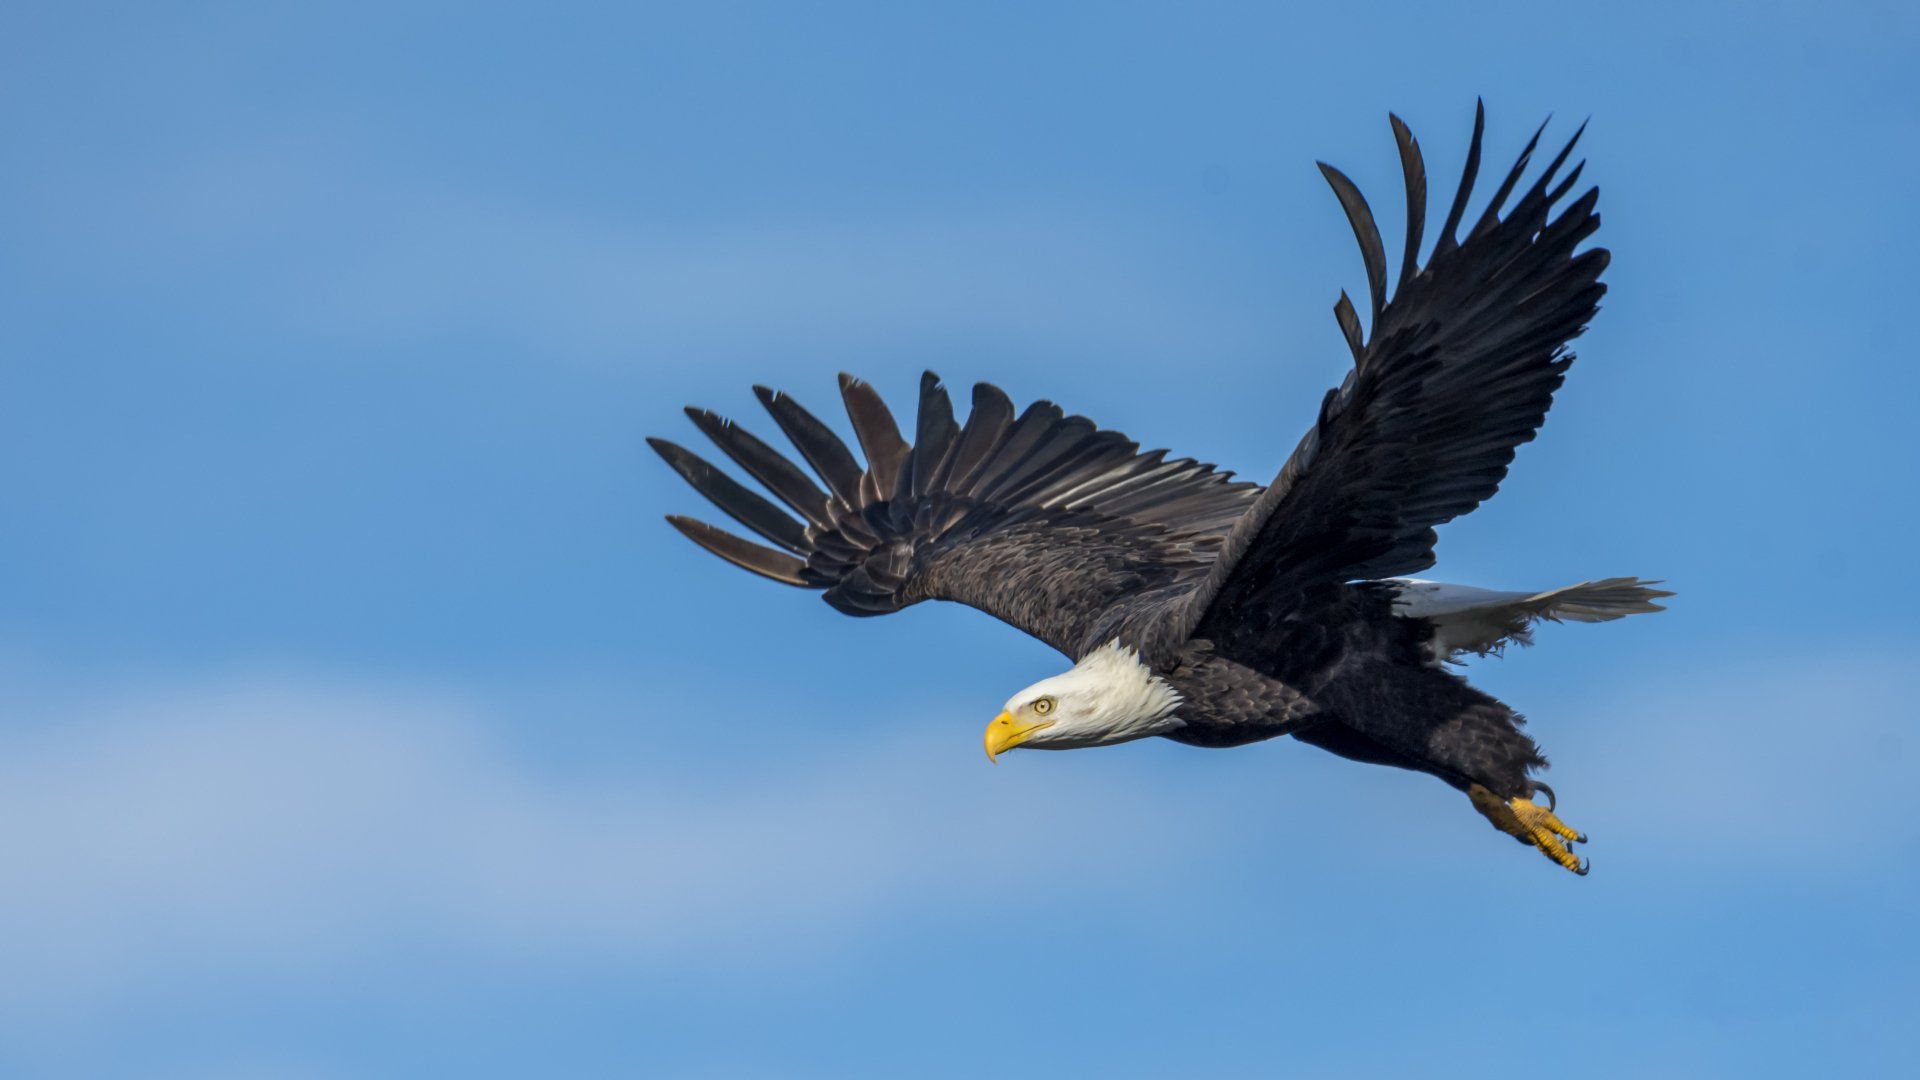 A bald eagle is flying through a blue sky.